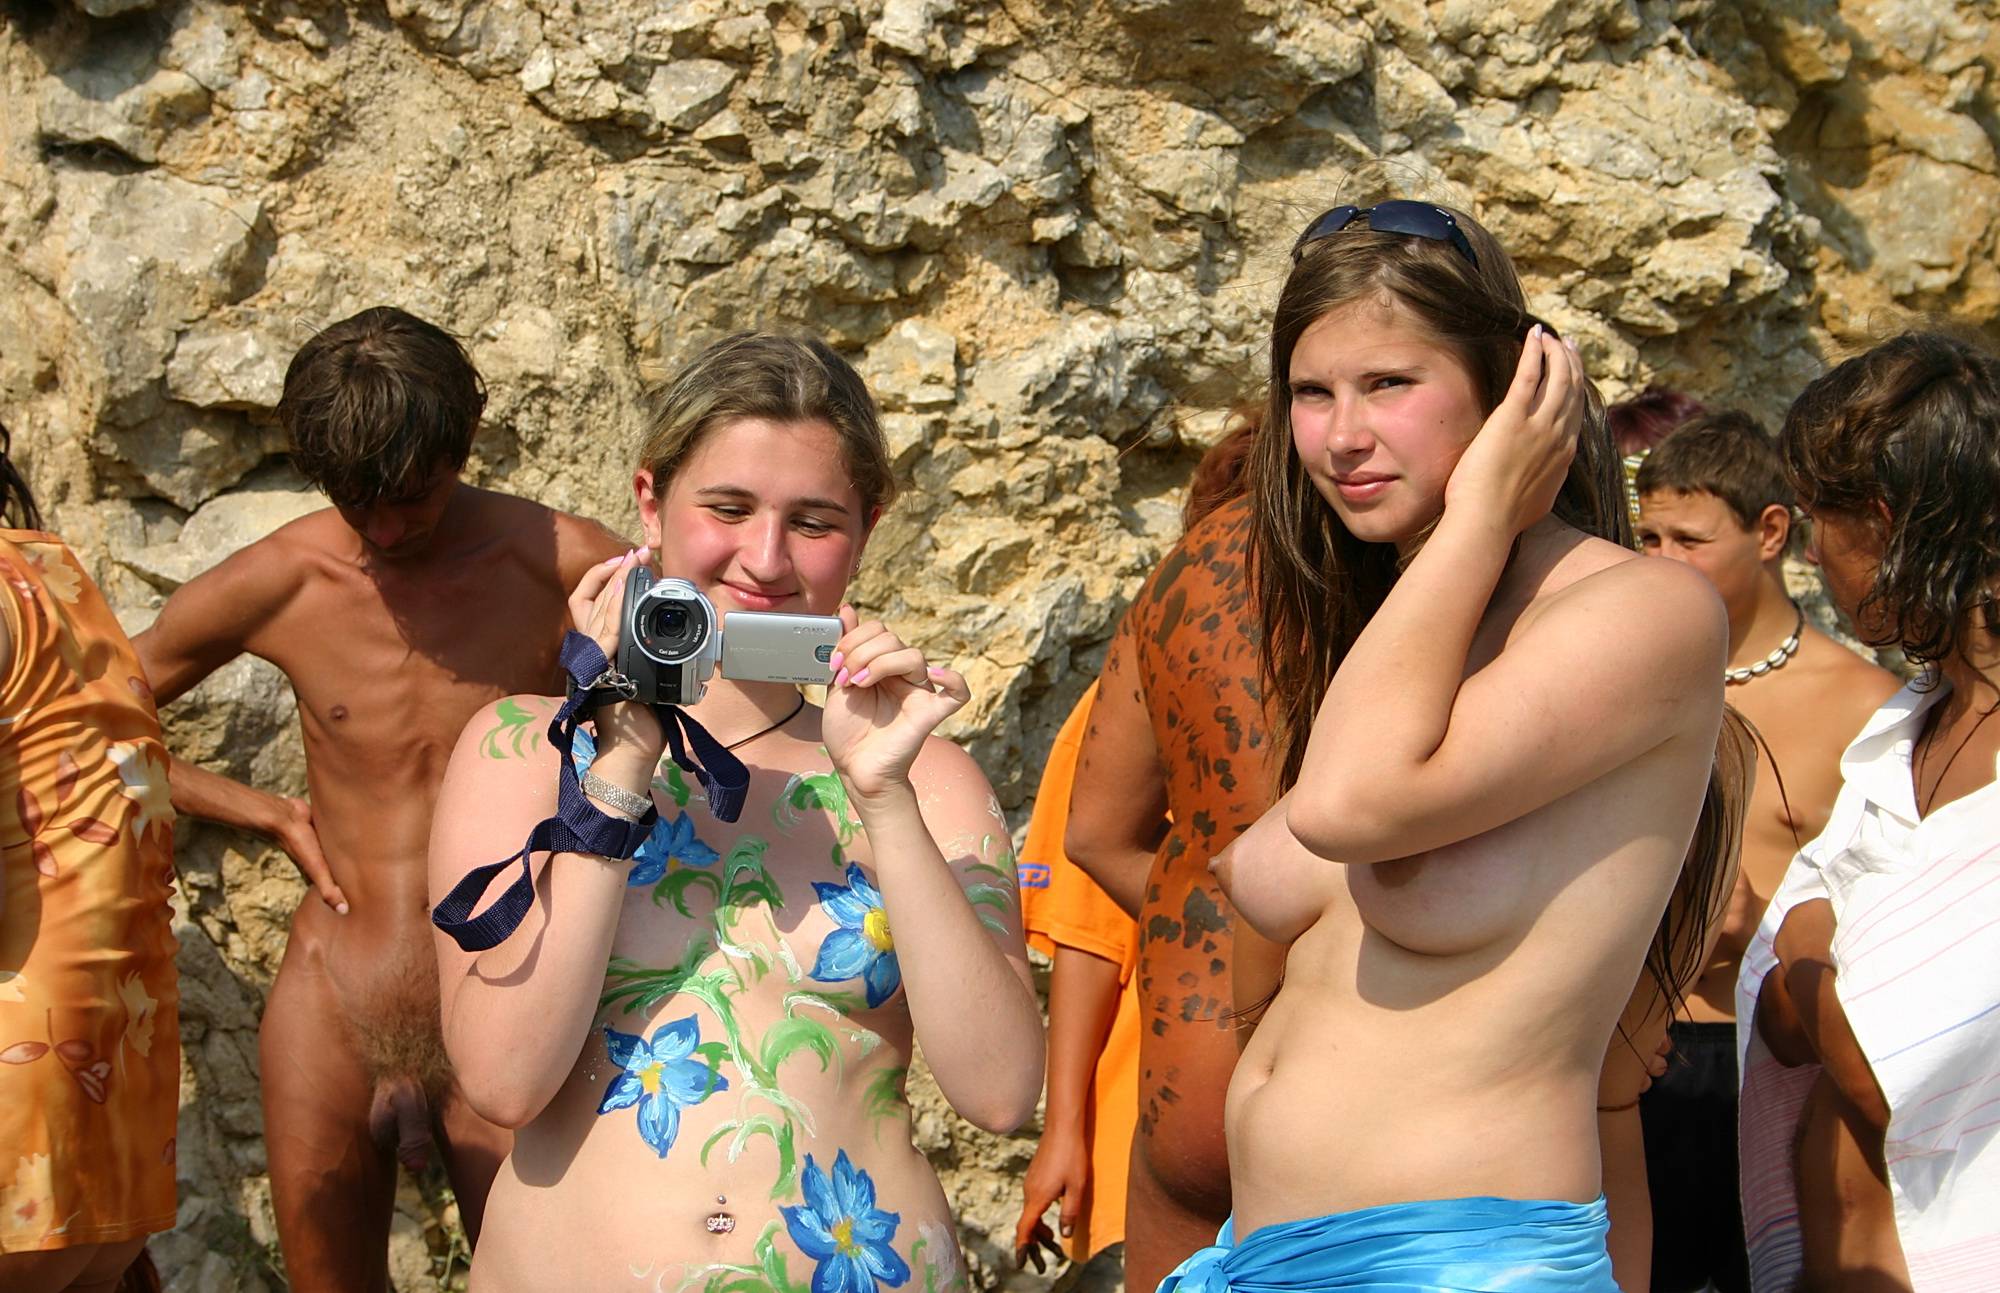 Rocky Naturist Gathering - Nudist Teens - 2